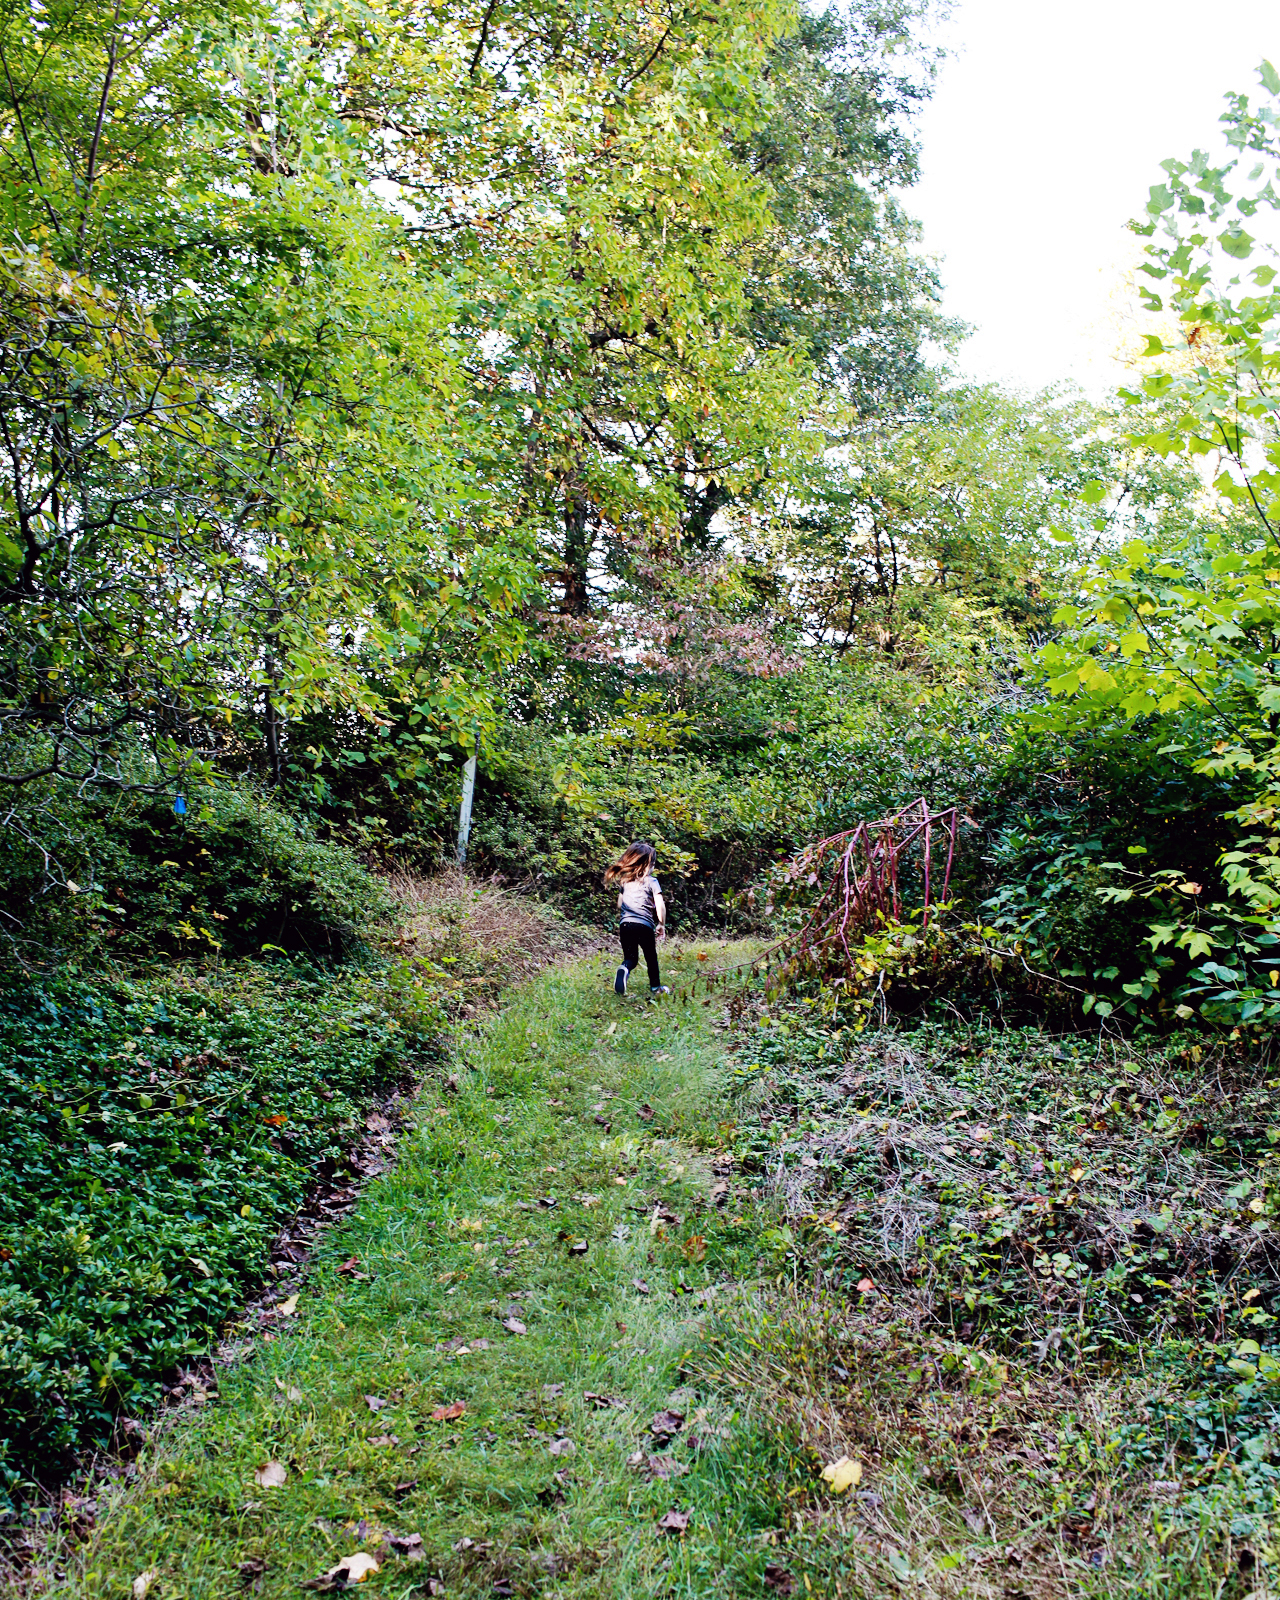 DC Guide - Fall Foliage Destinations: The National Arboretum